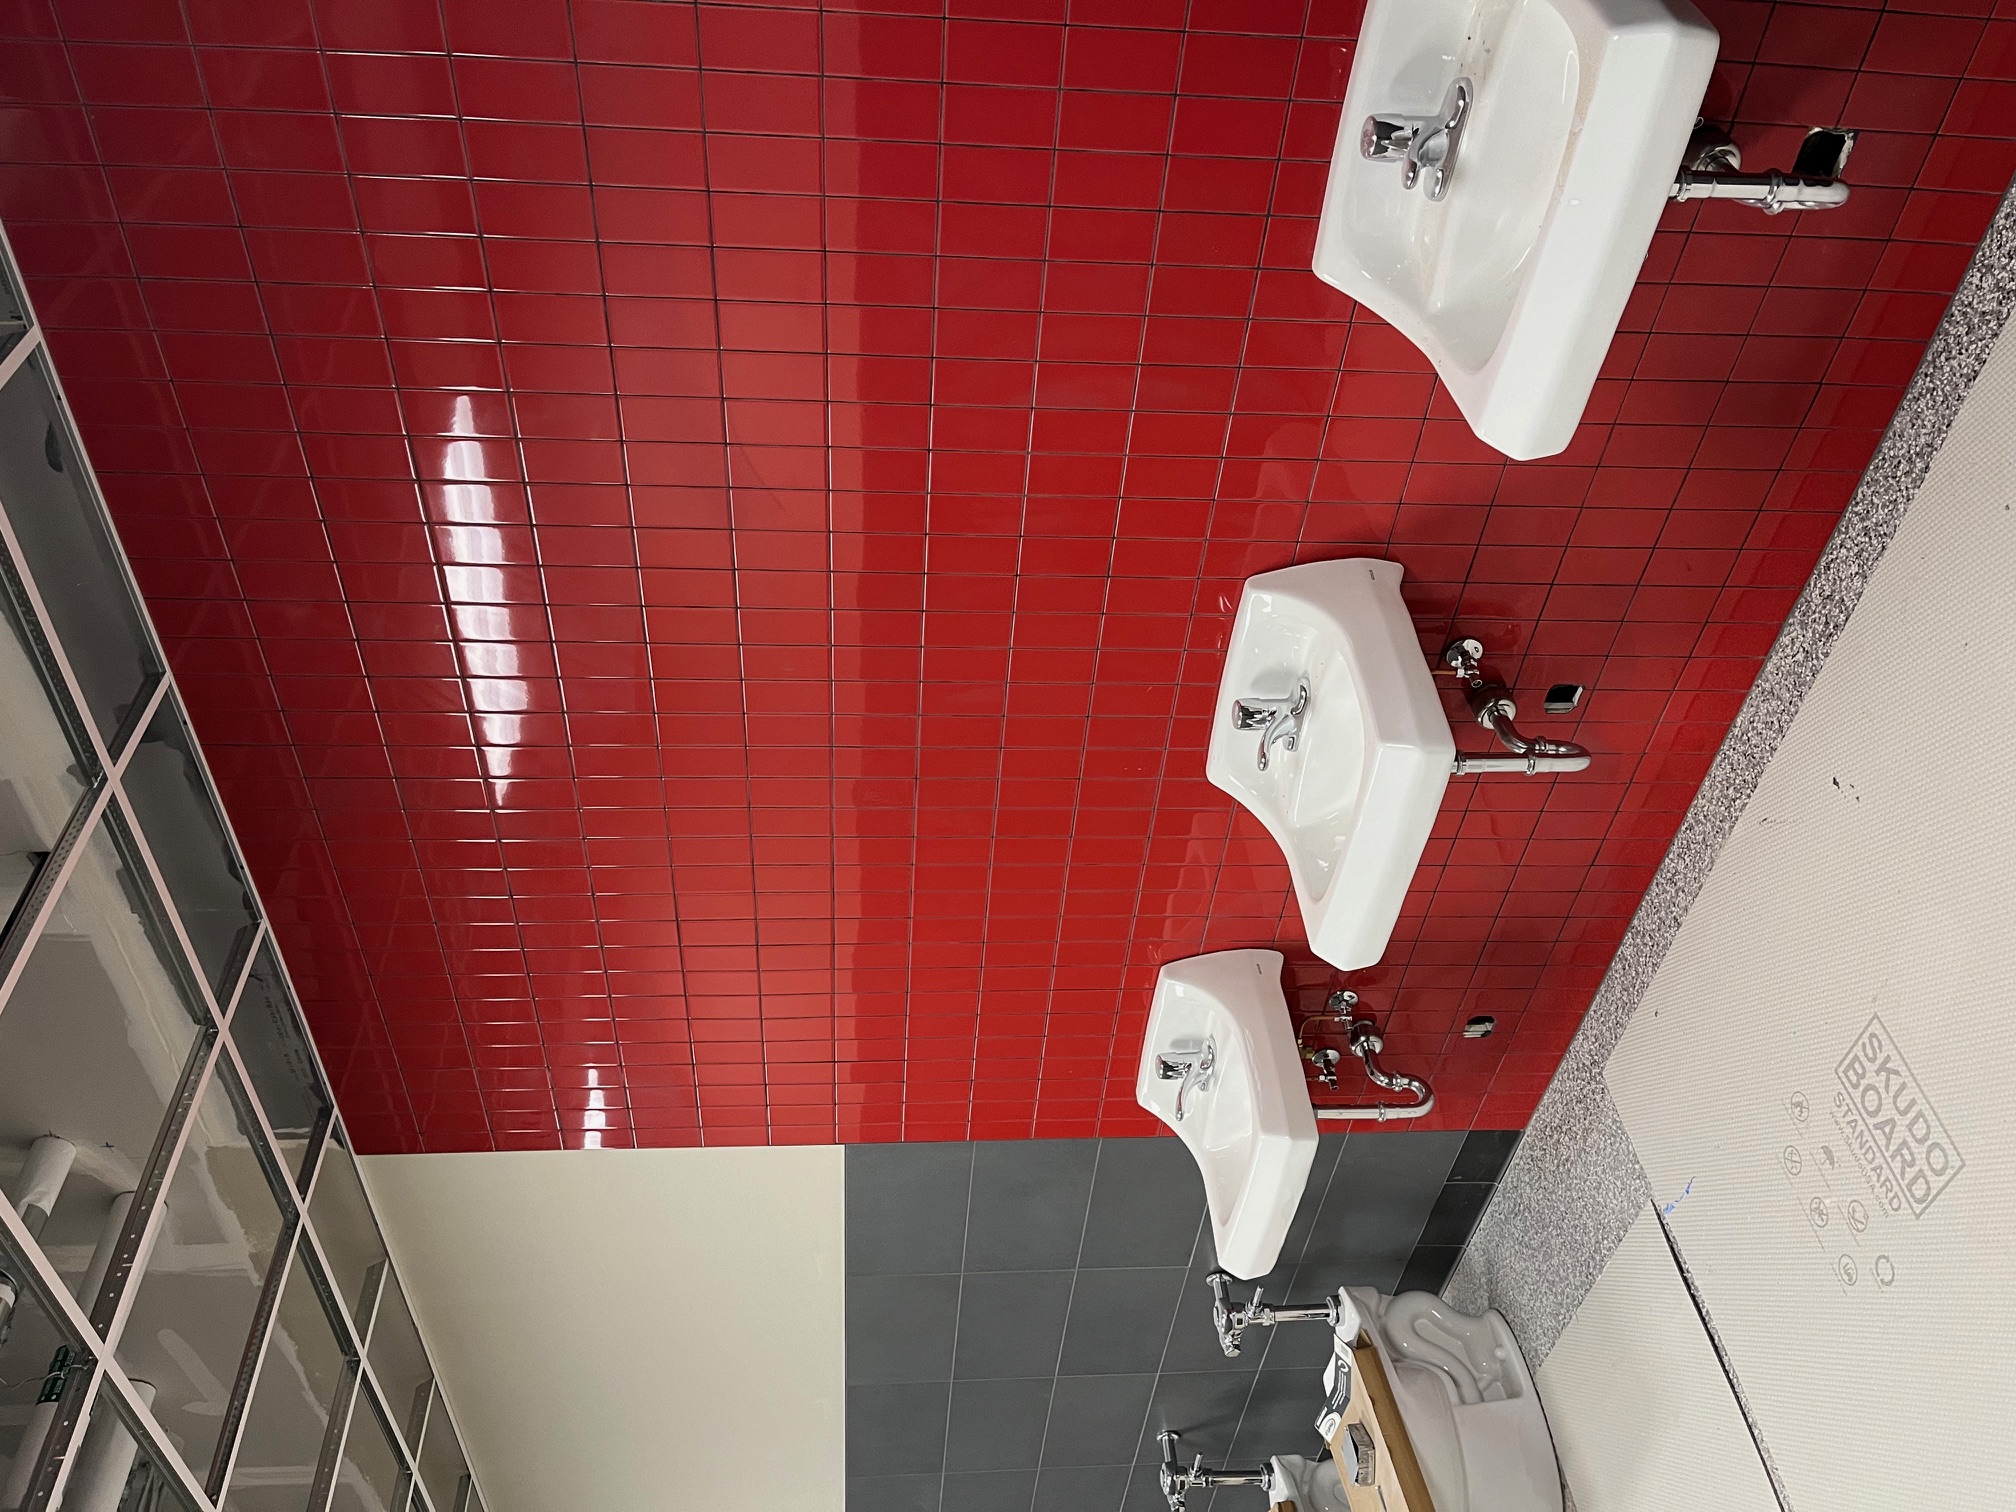 High School wing, new restroom